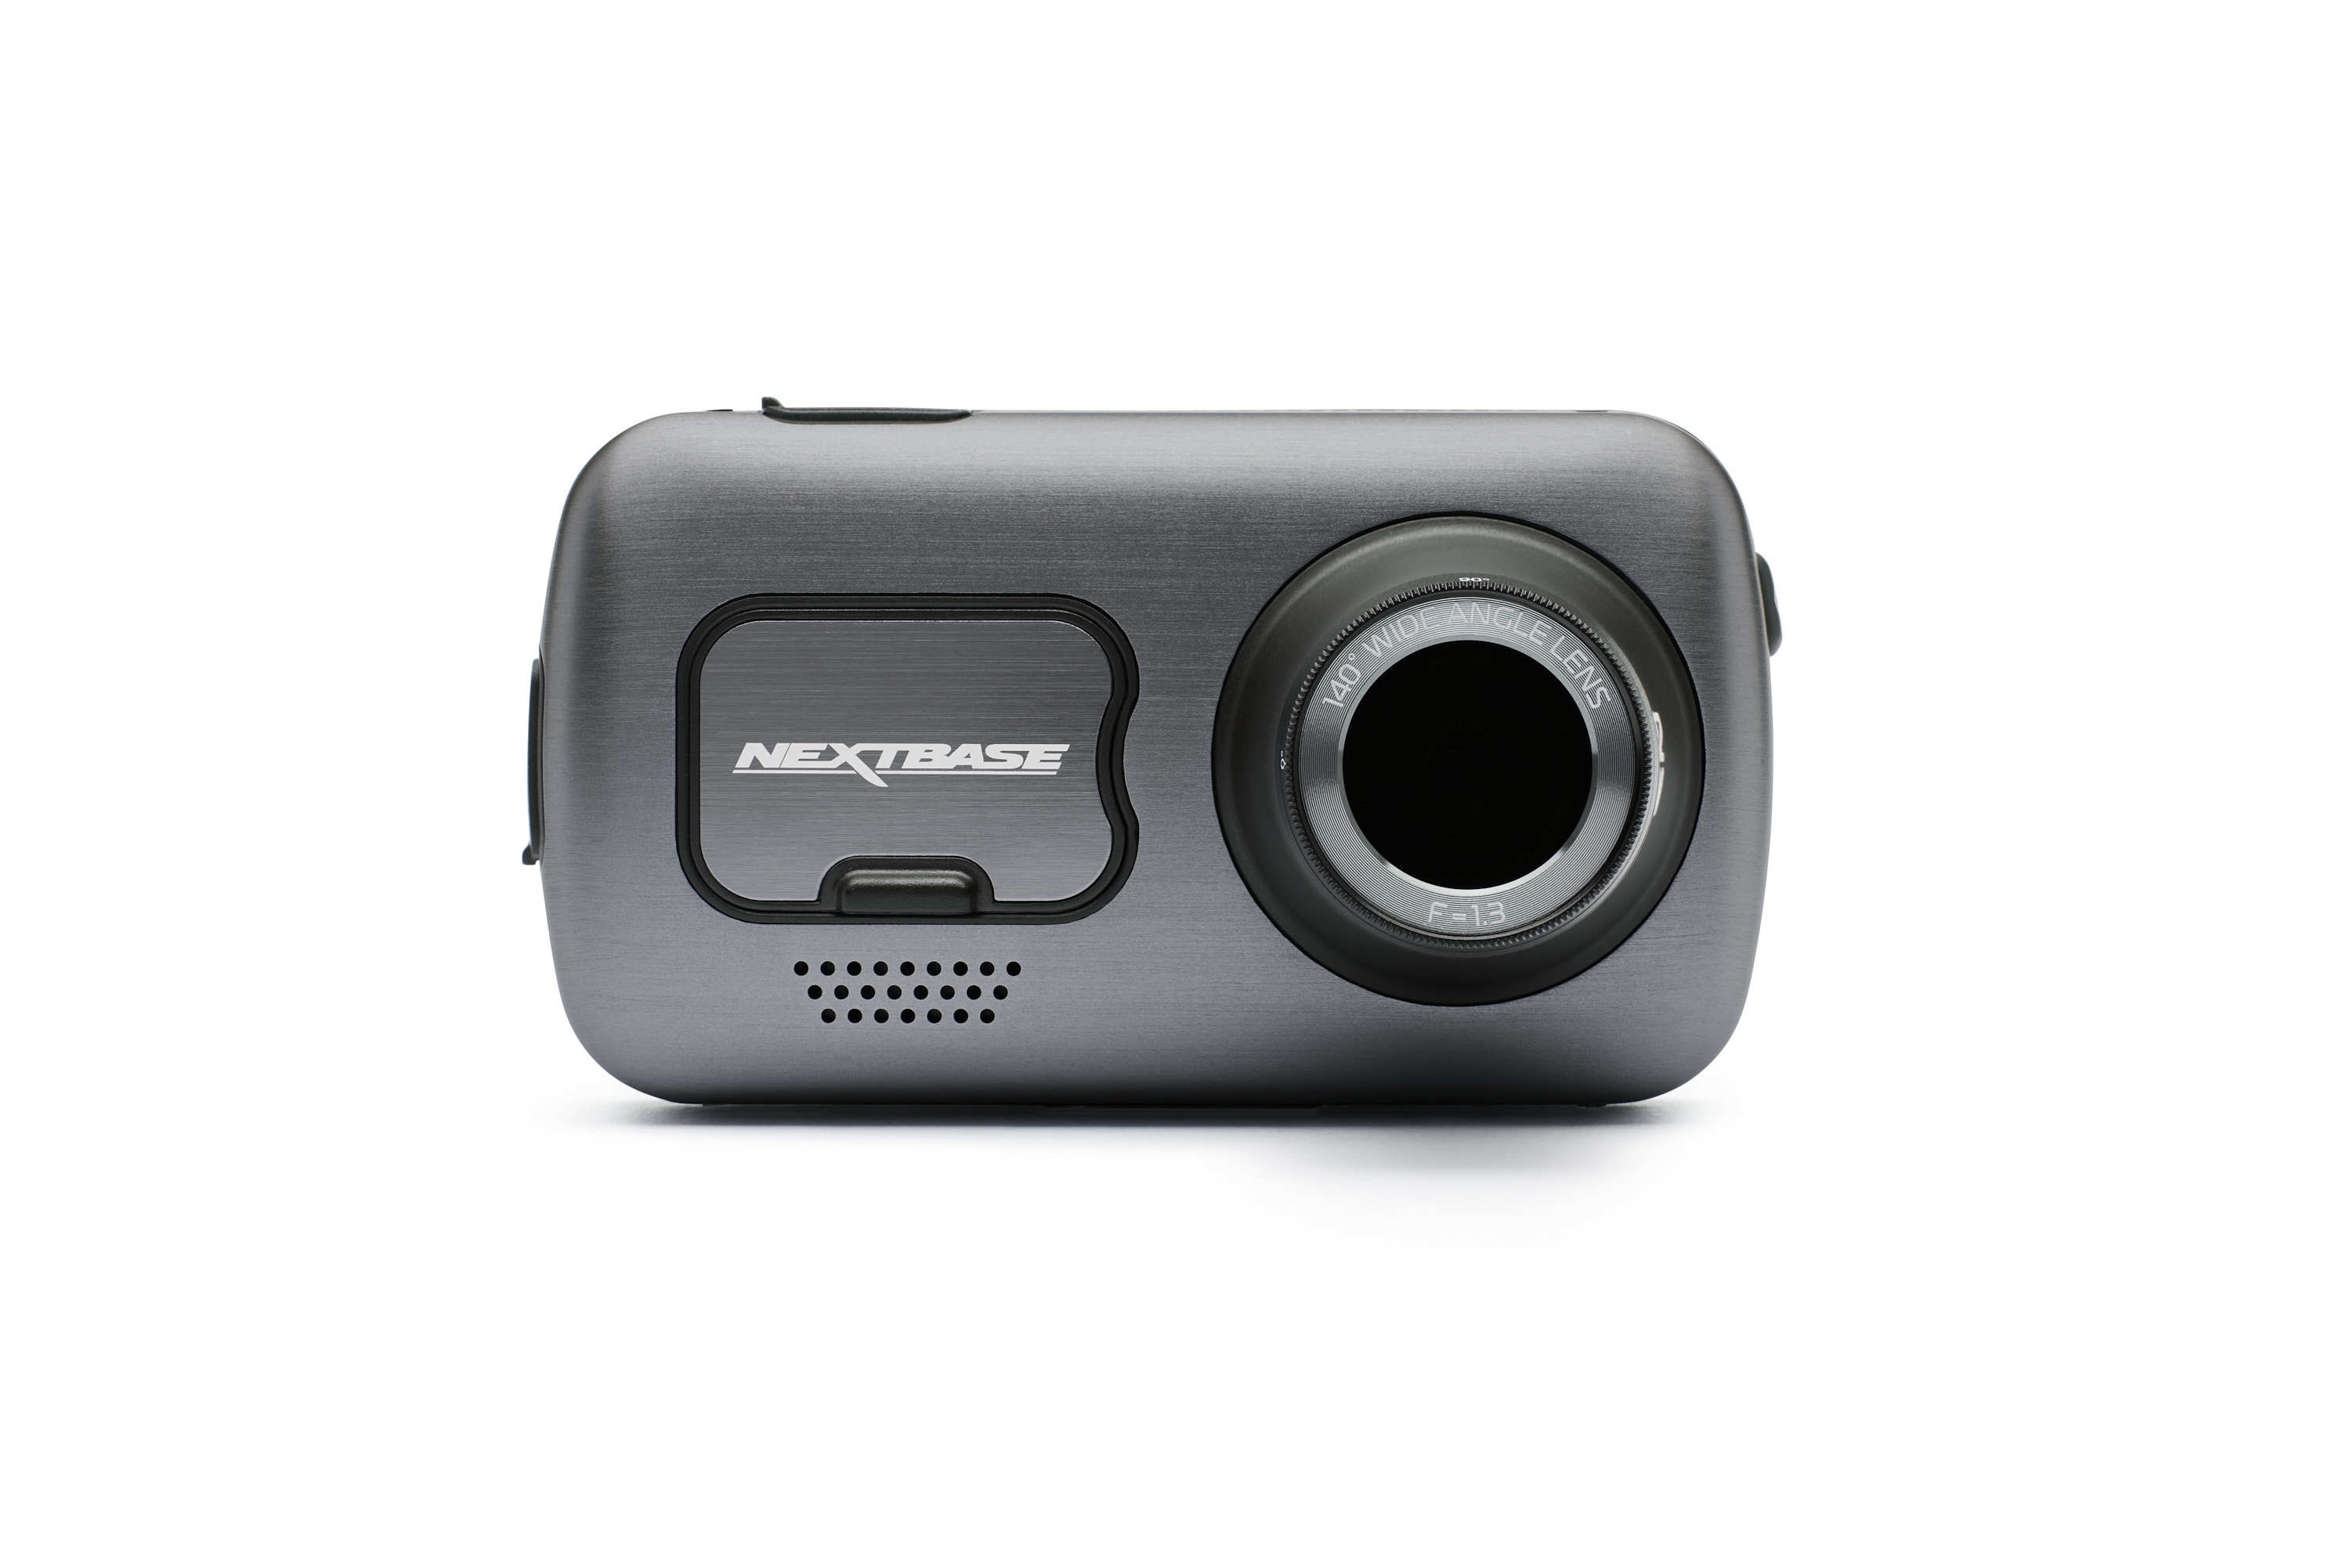 Nextbase Announces High Performance 622GW Dash Cam Now Available